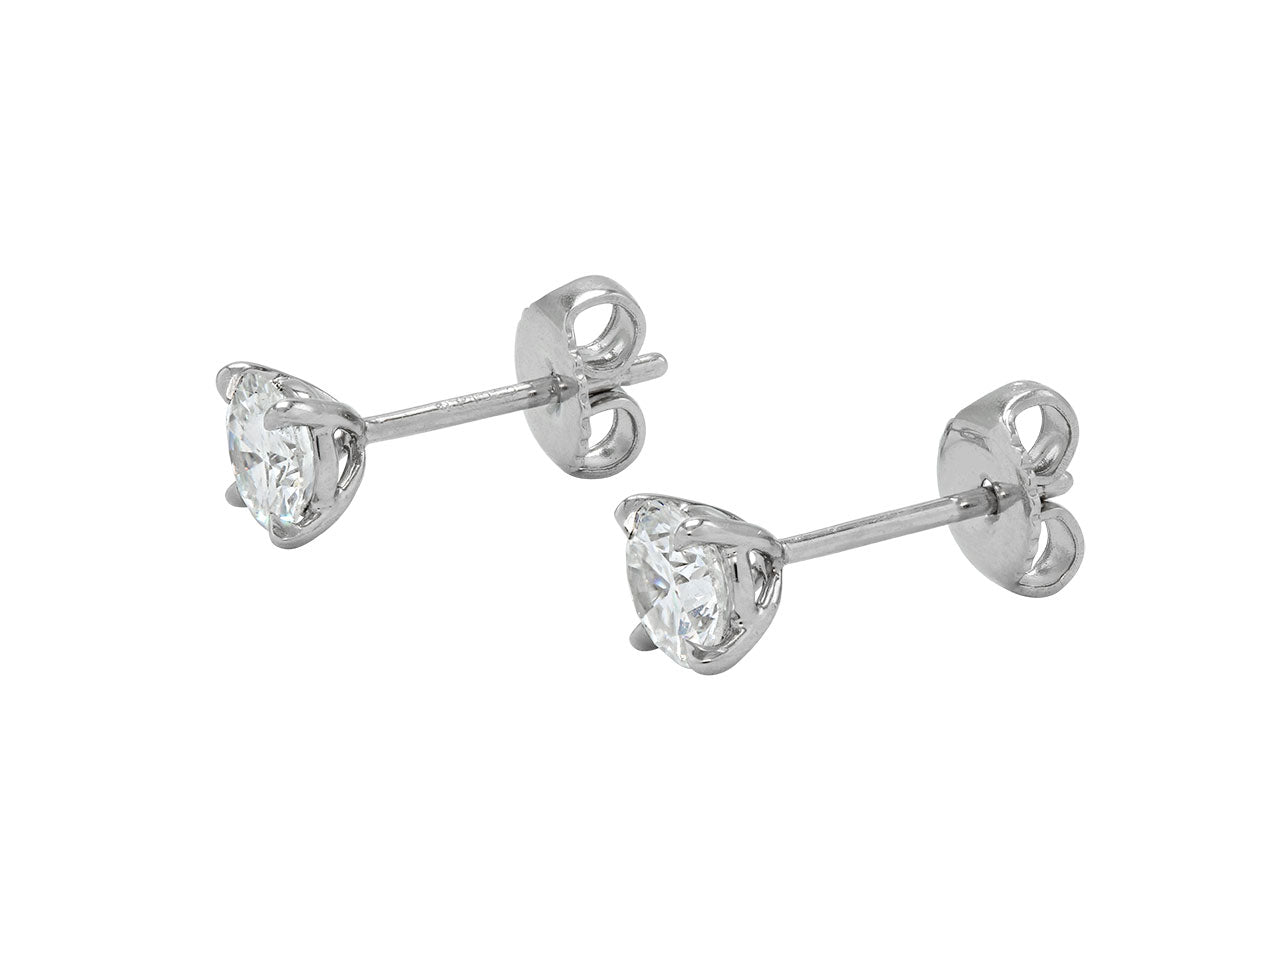 Beladora 'Bespoke' Diamond Stud Earrings, 1.12 total carats, in Platinum